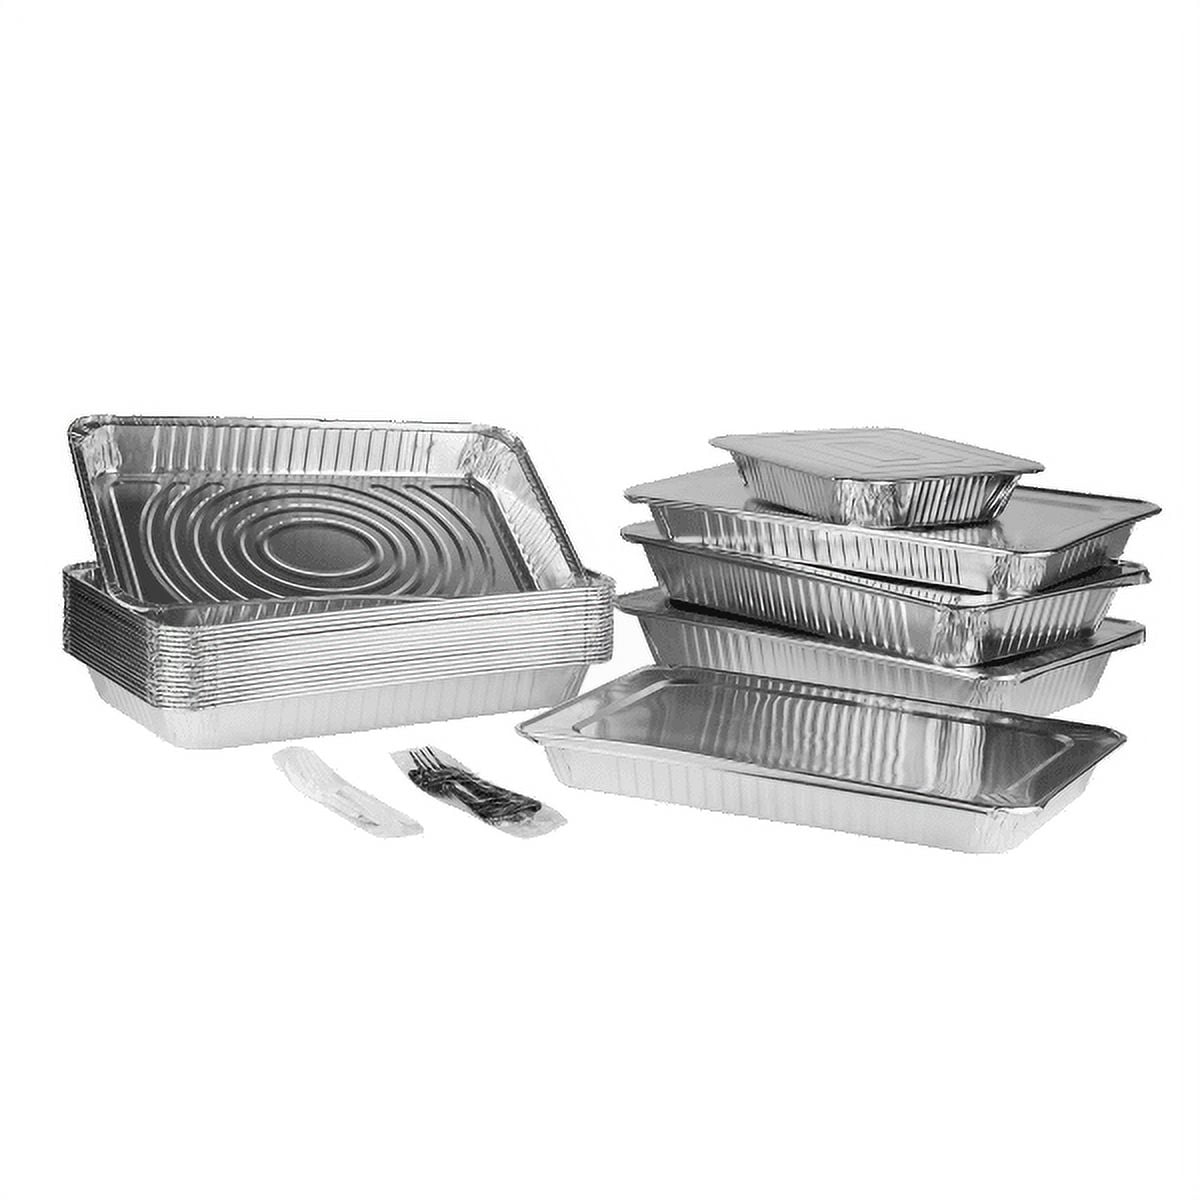 Full Size Heavy Duty Aluminum Foil Steam Table Pans, Karat AF-STP105